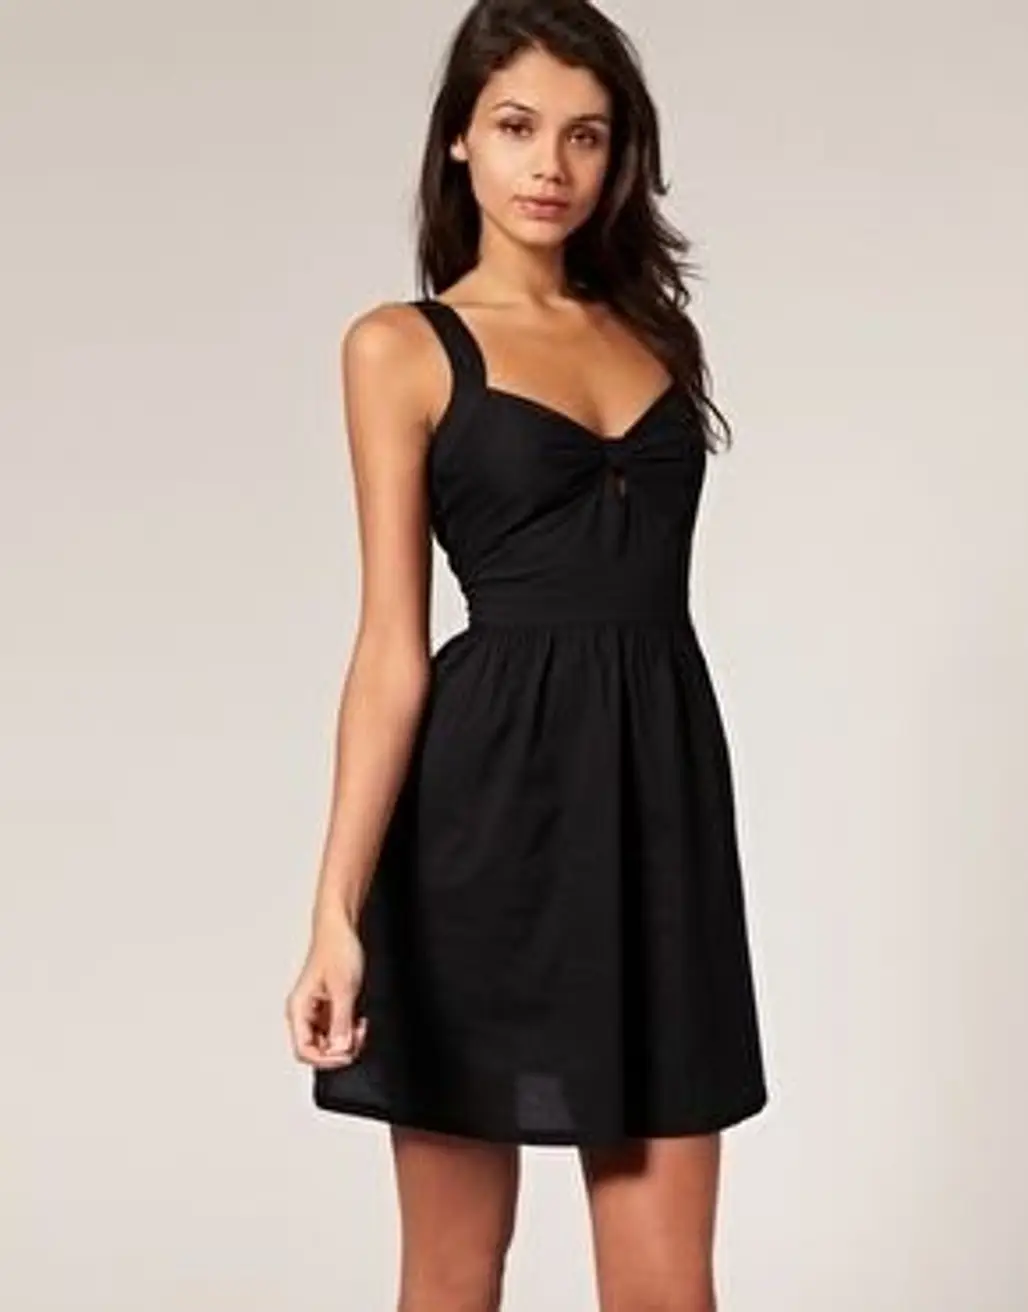 Little Black Dress